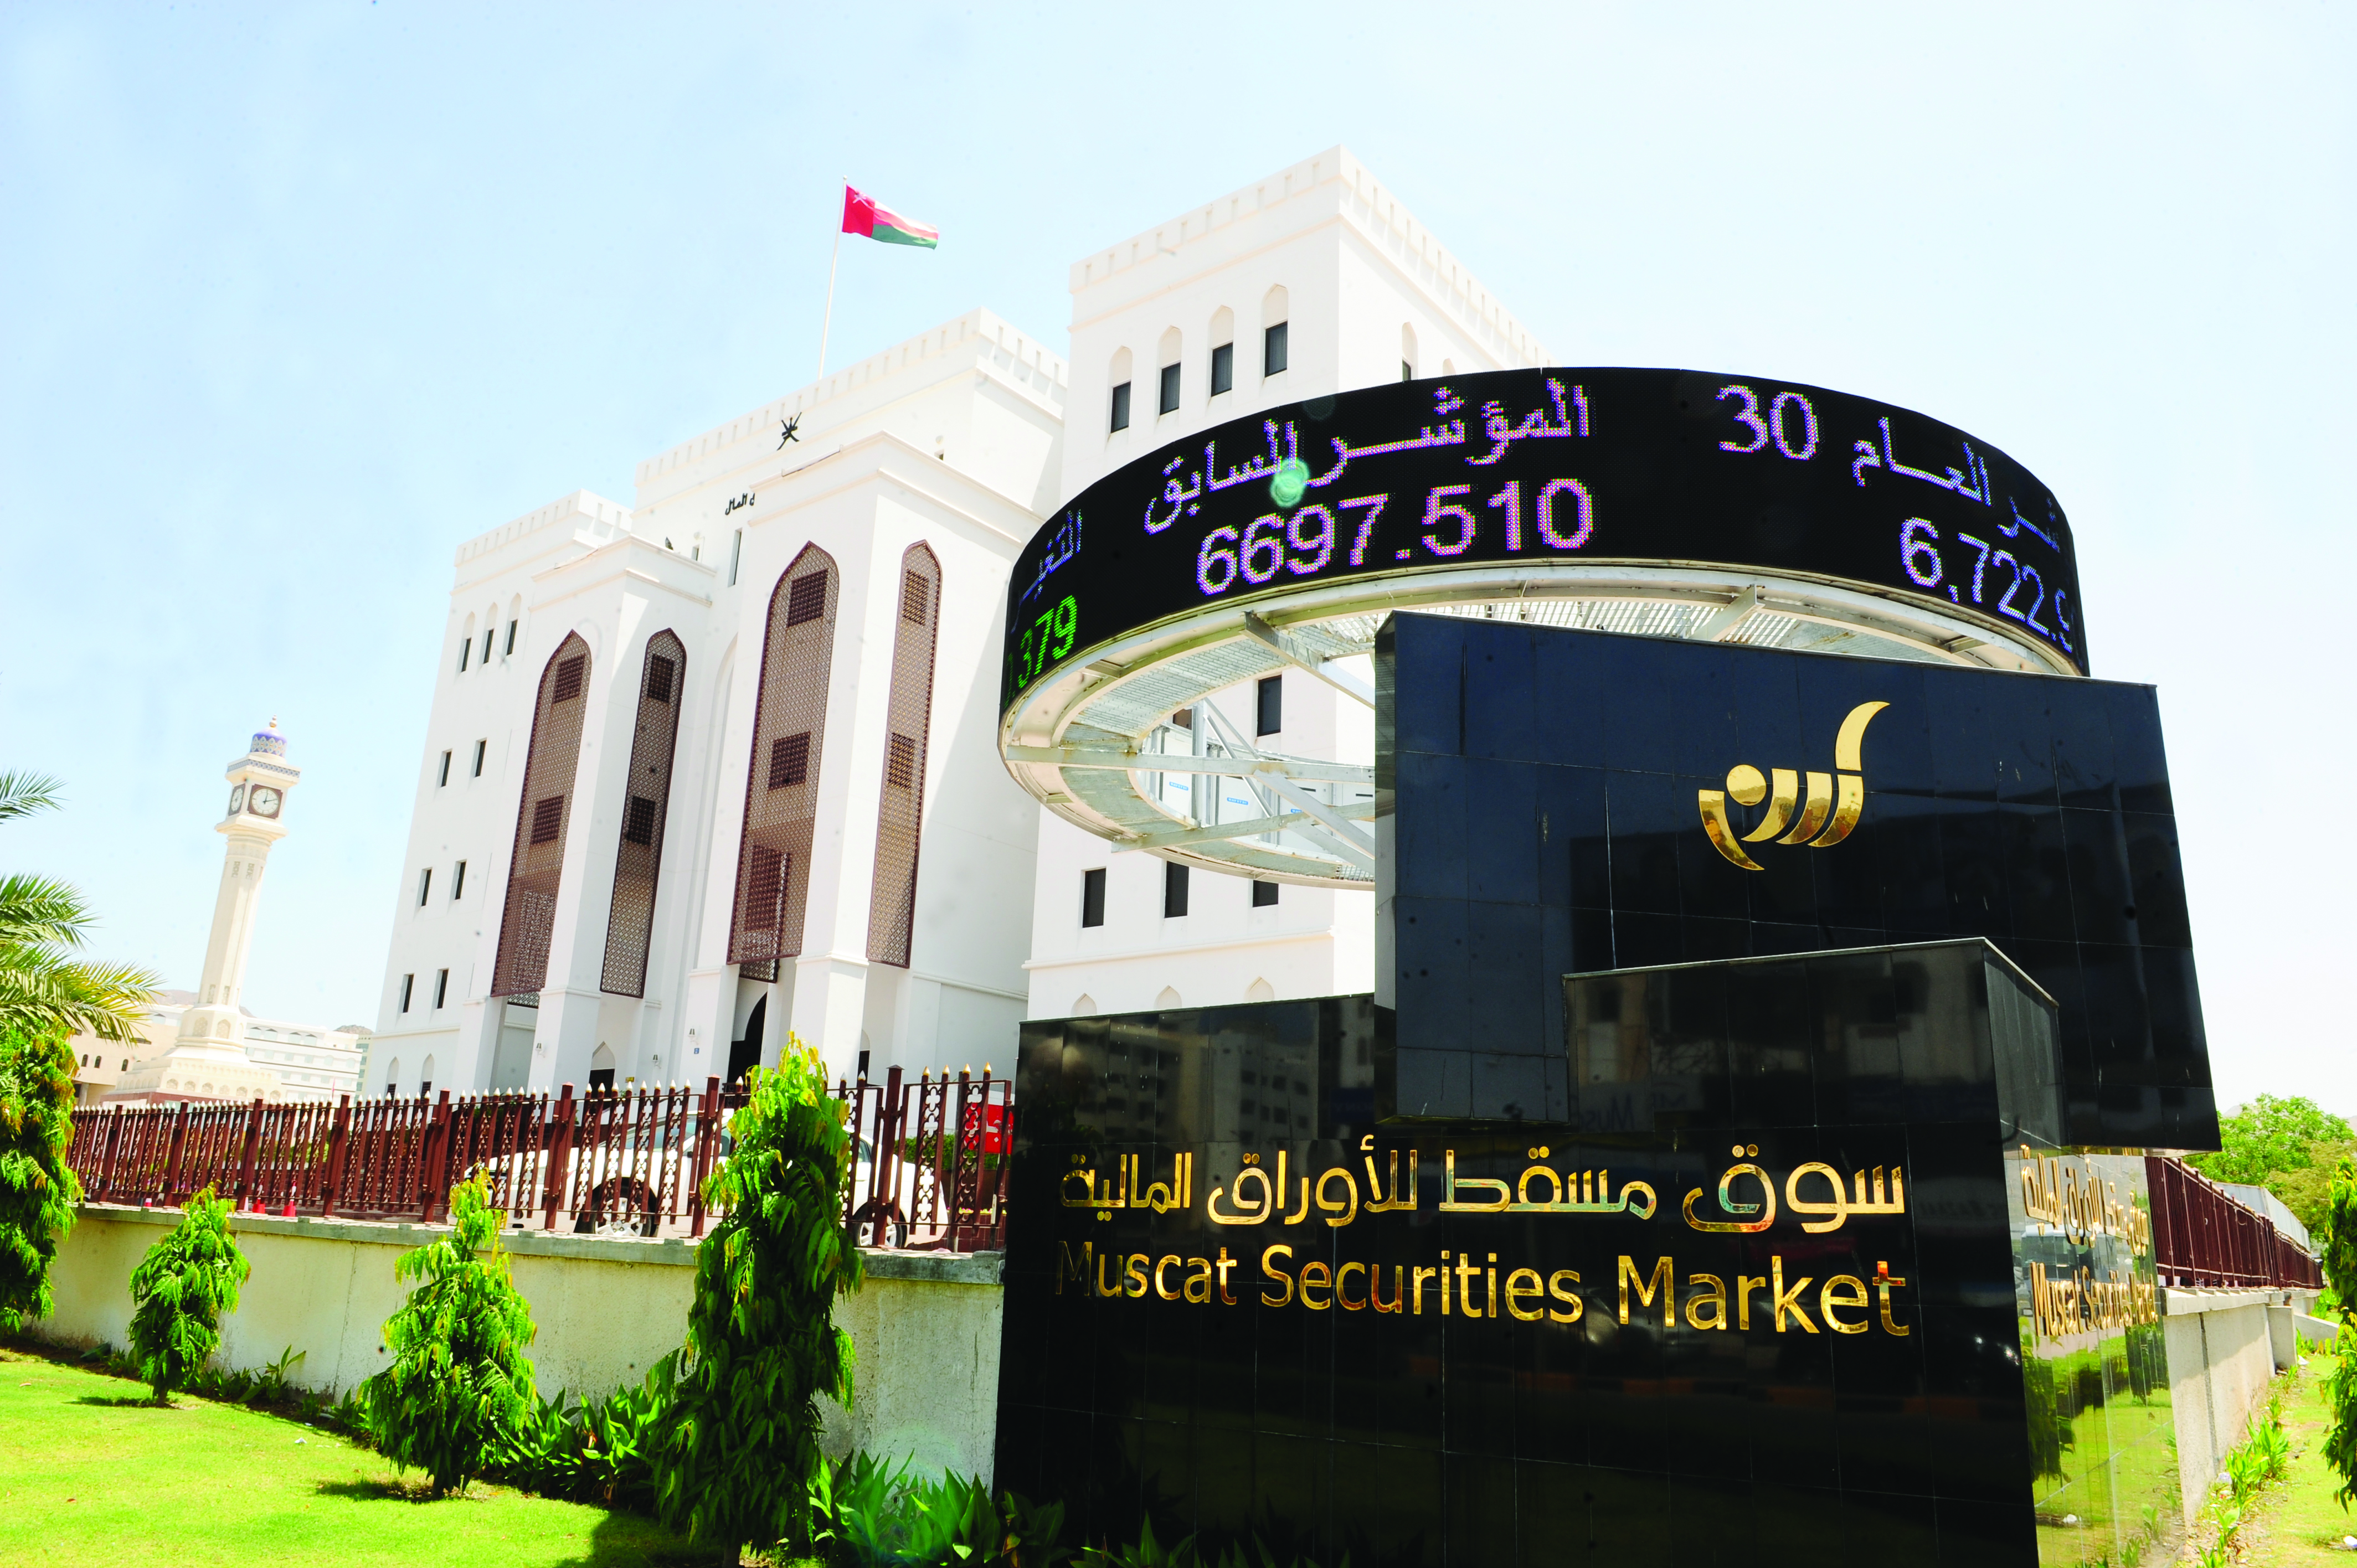 Omani bourse less affected by global market crash